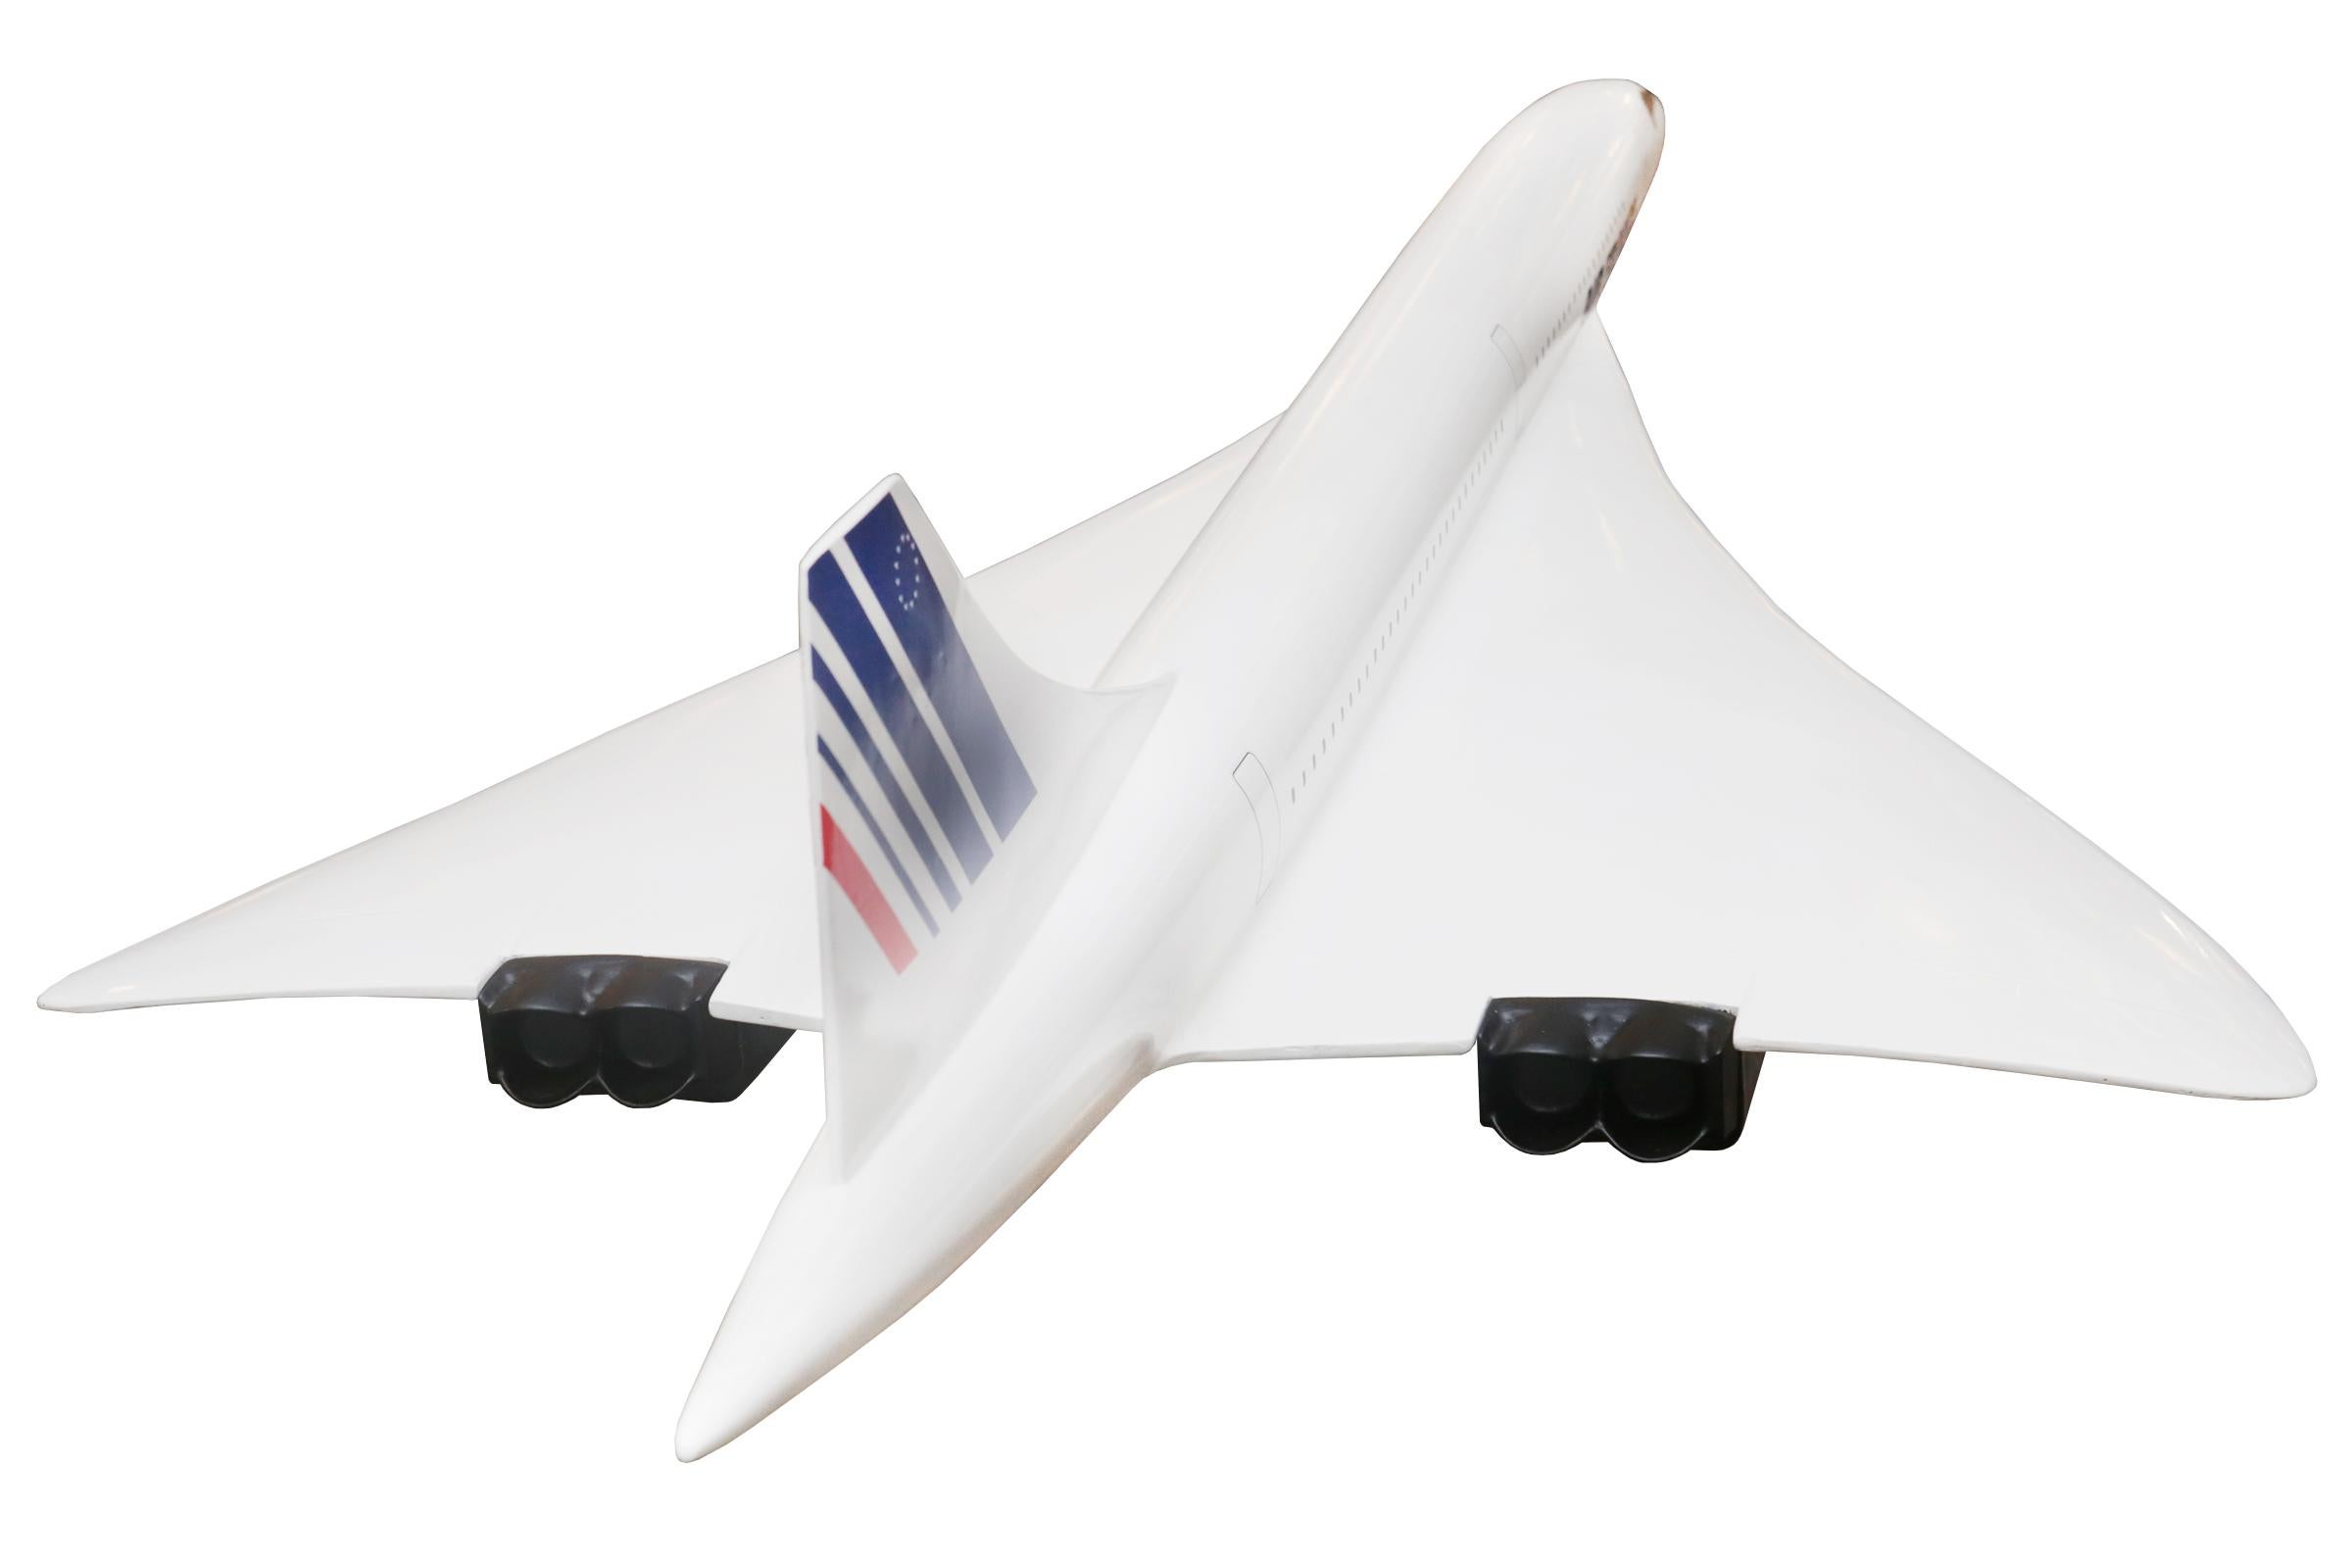 Resin Sculpture Concorde Model Scale 1/36